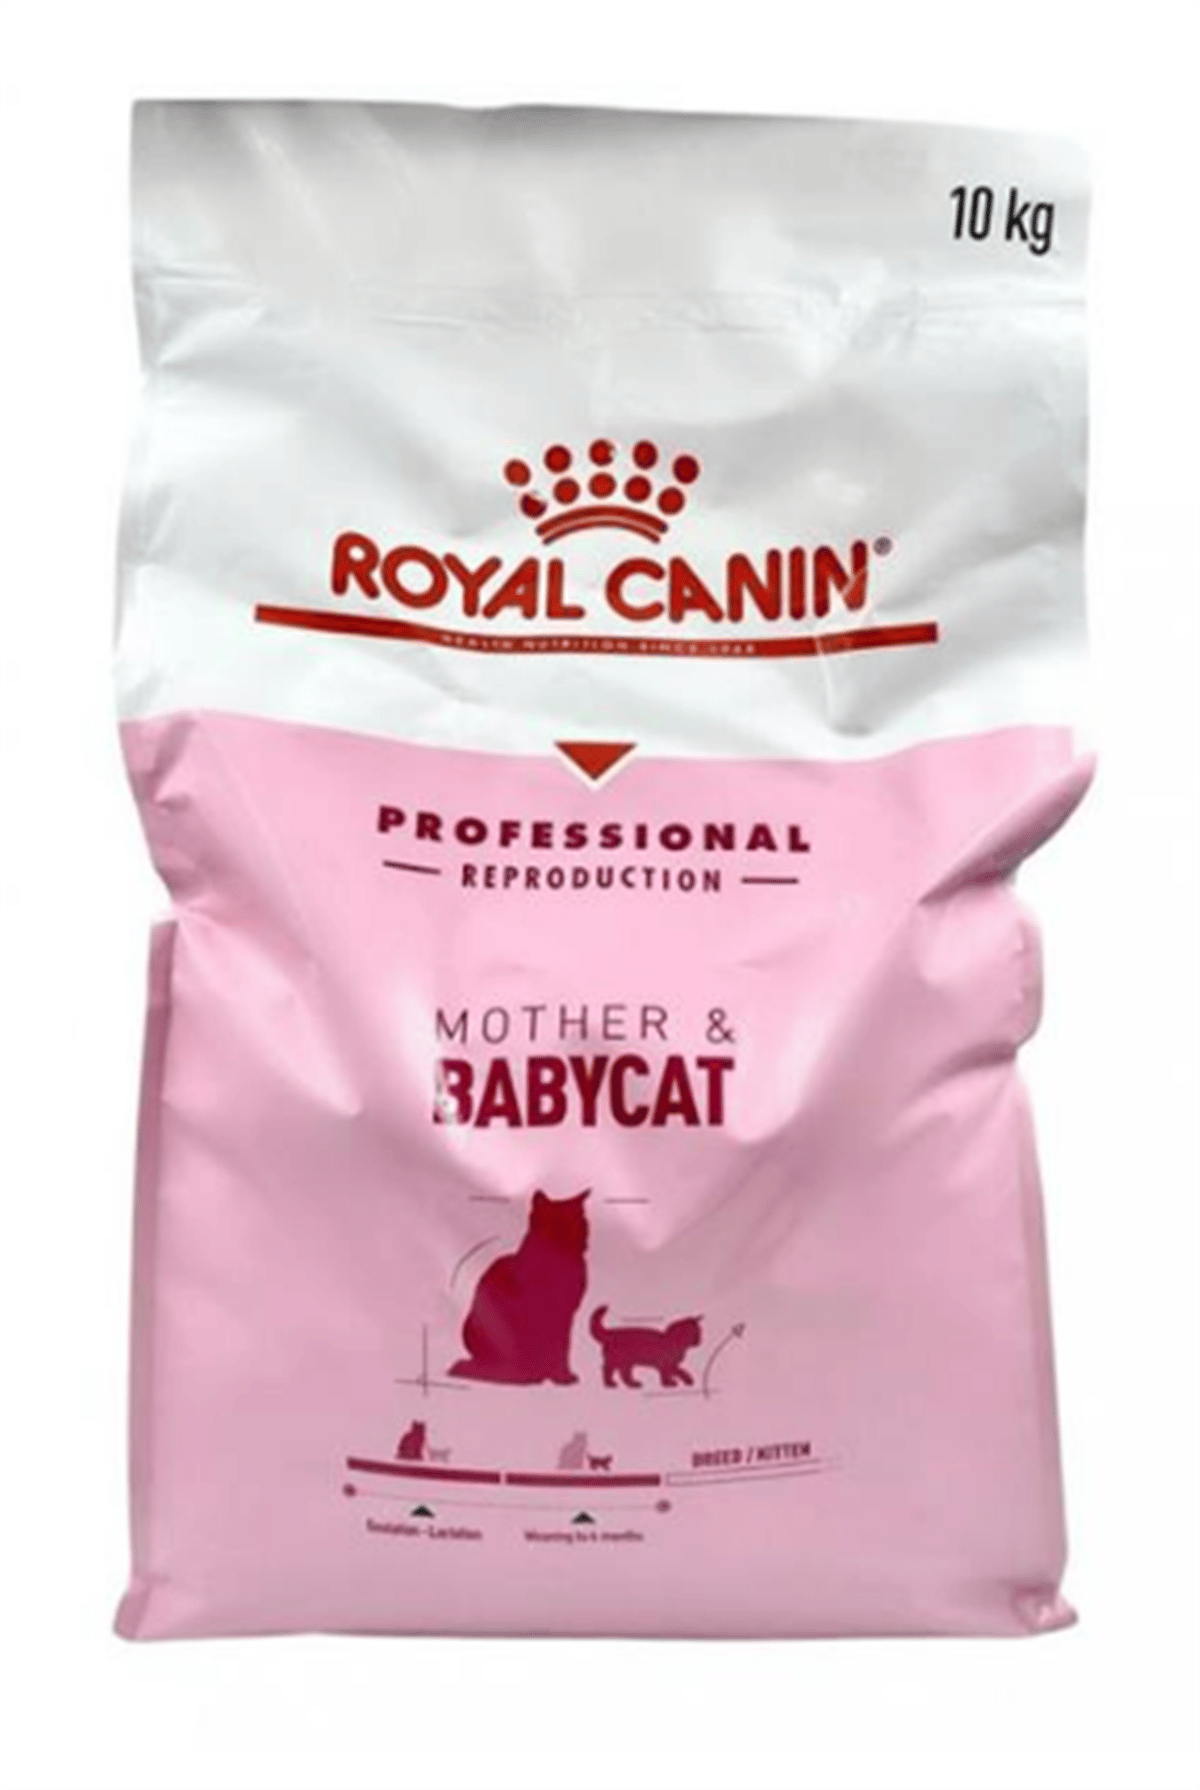 Royal Canin Mother & Babycat Professional Yavru Kuru Kedi Maması 10 Kg |  Hepsi Patime